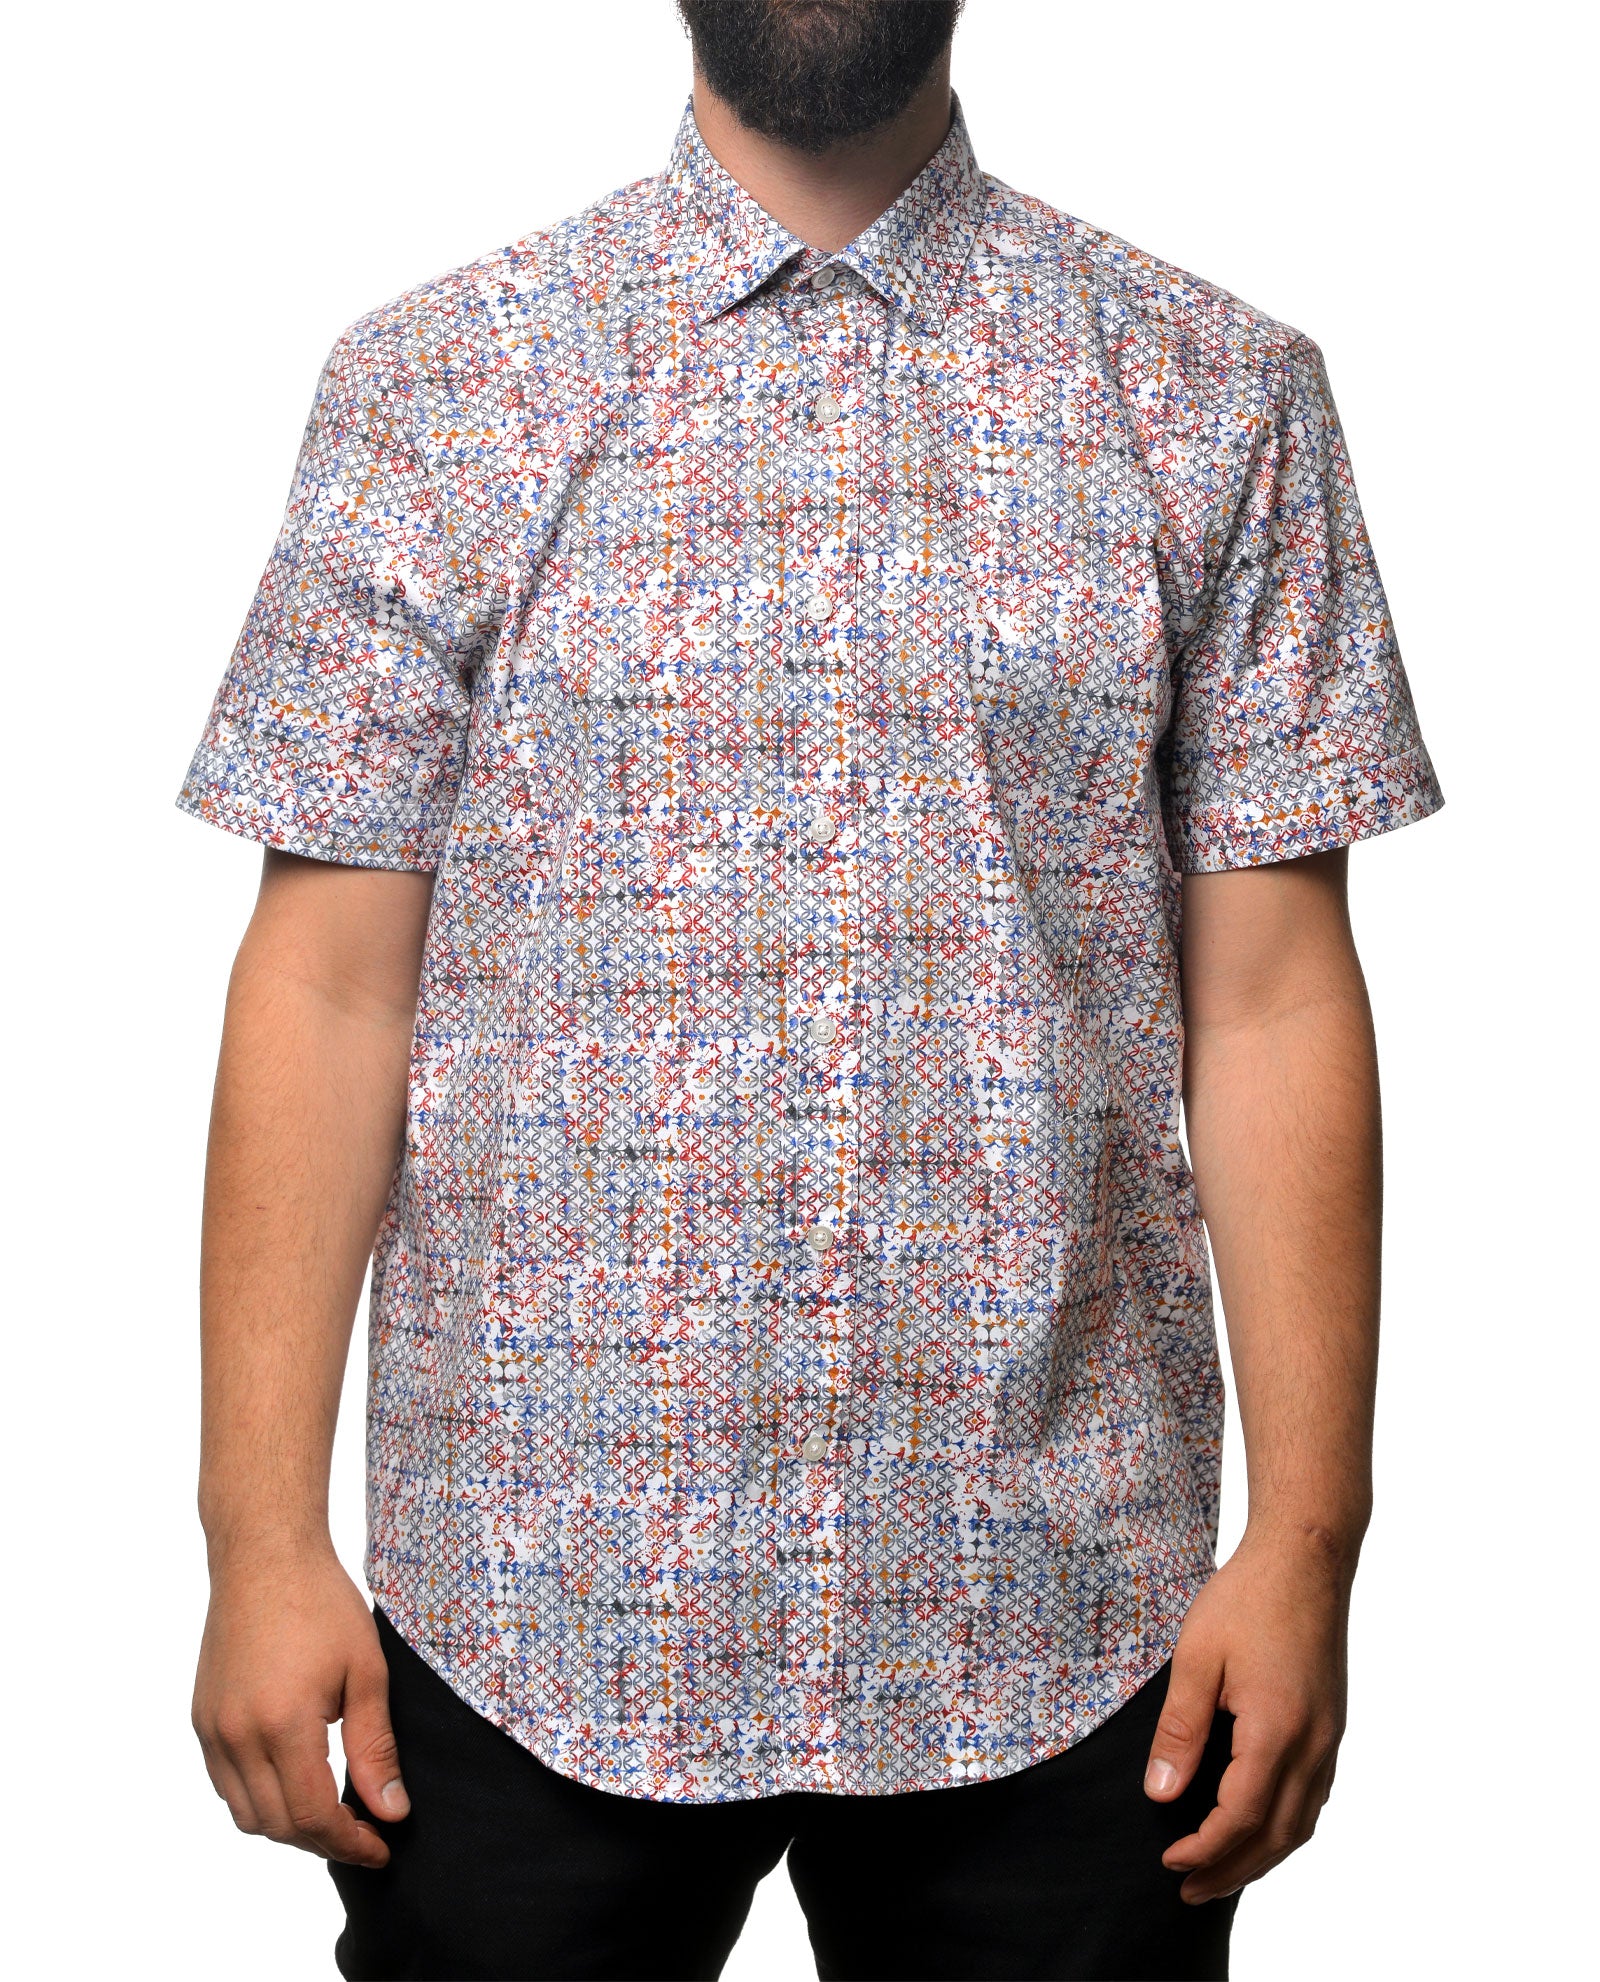 Linked Pattern Short Sleeve Shirt